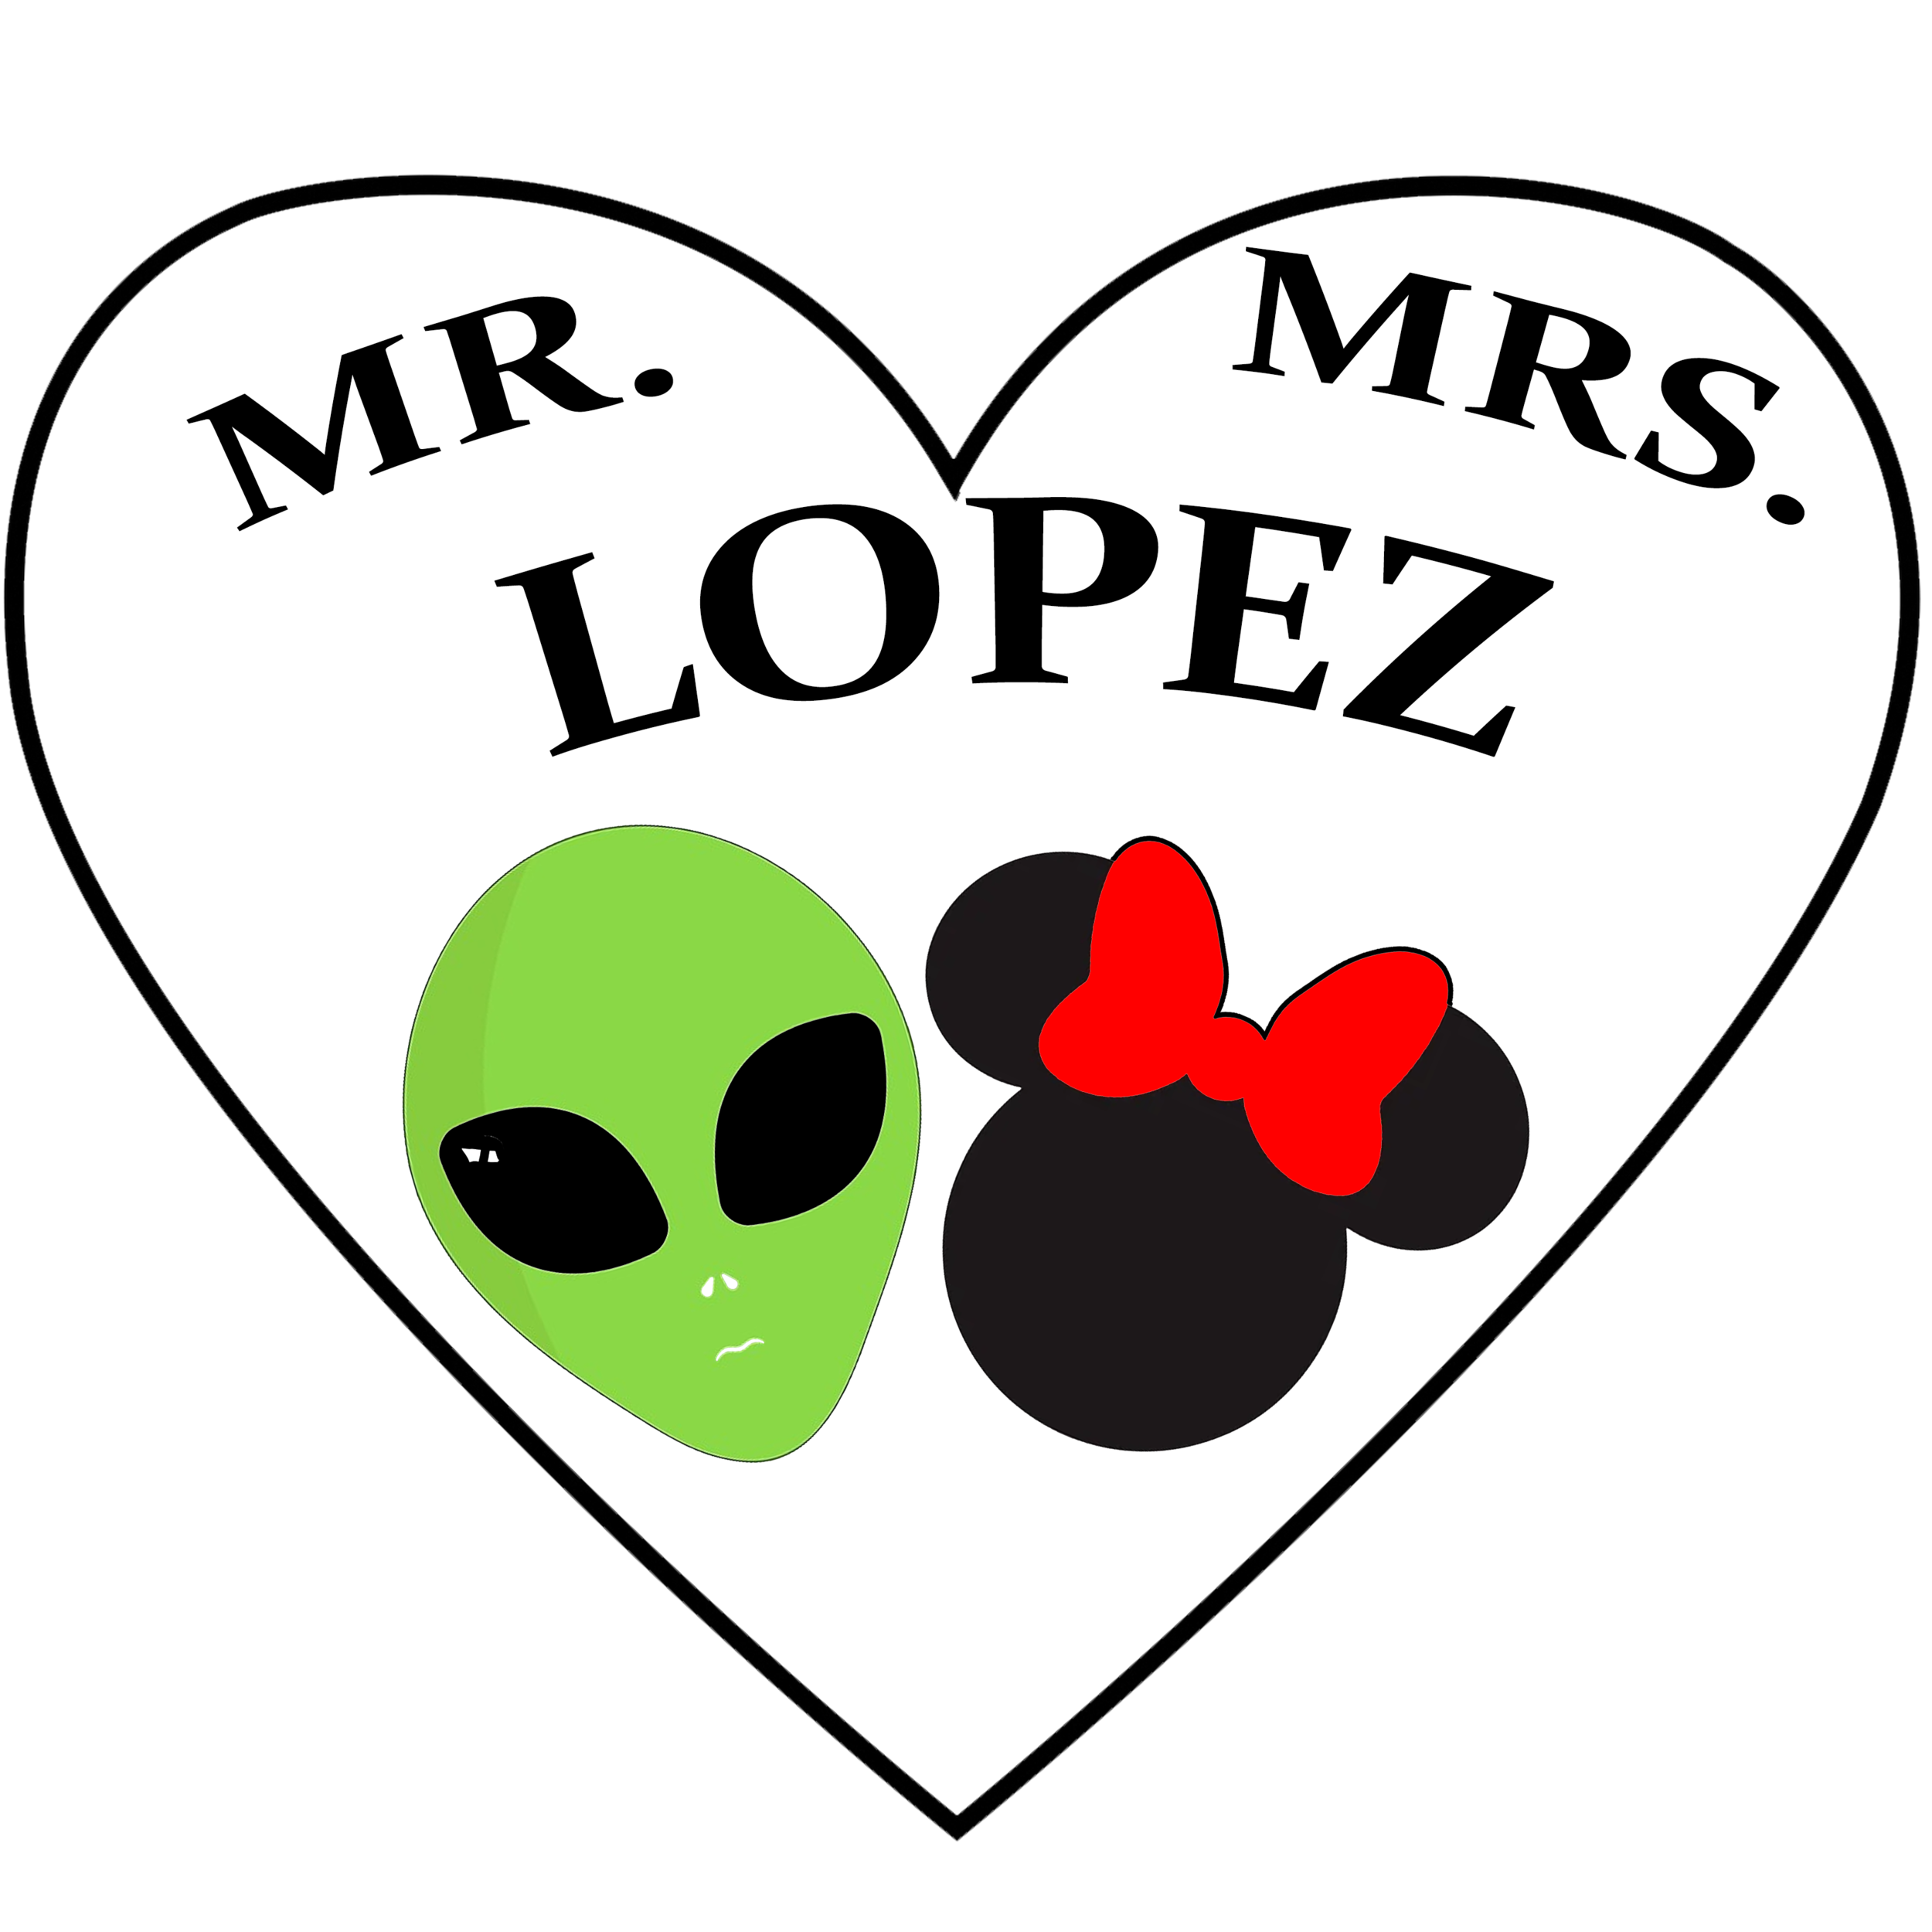 Mom and Dad Lopez Sponsorship Logo.png